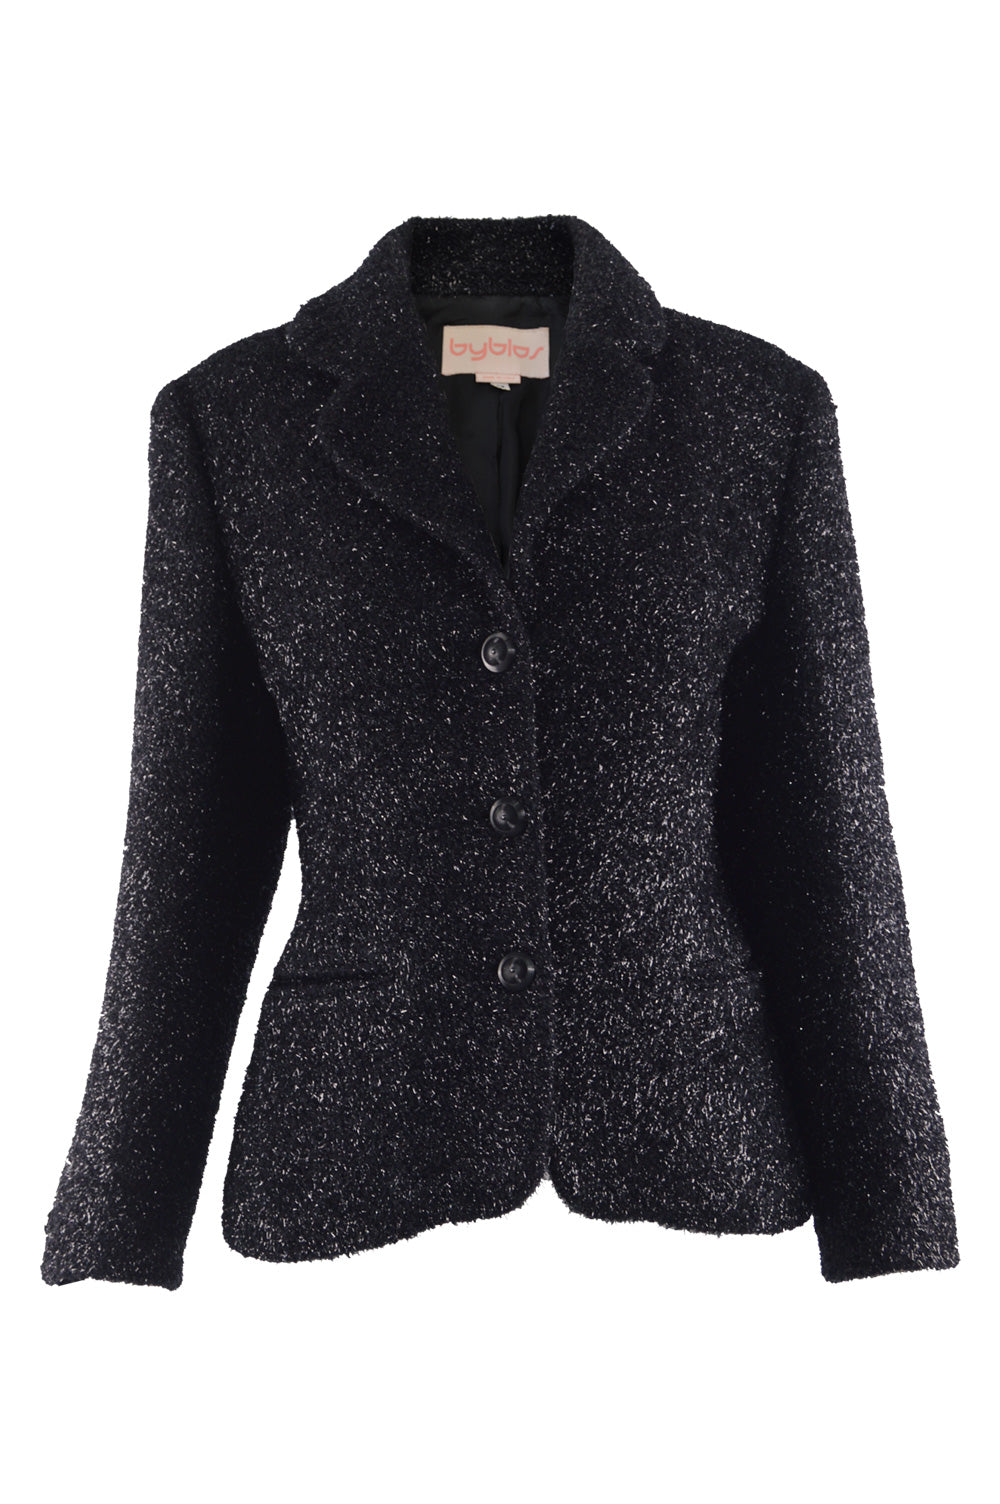 Preowned Black Fuzzy Vintage Lurex & Wool Jacket, 1980s